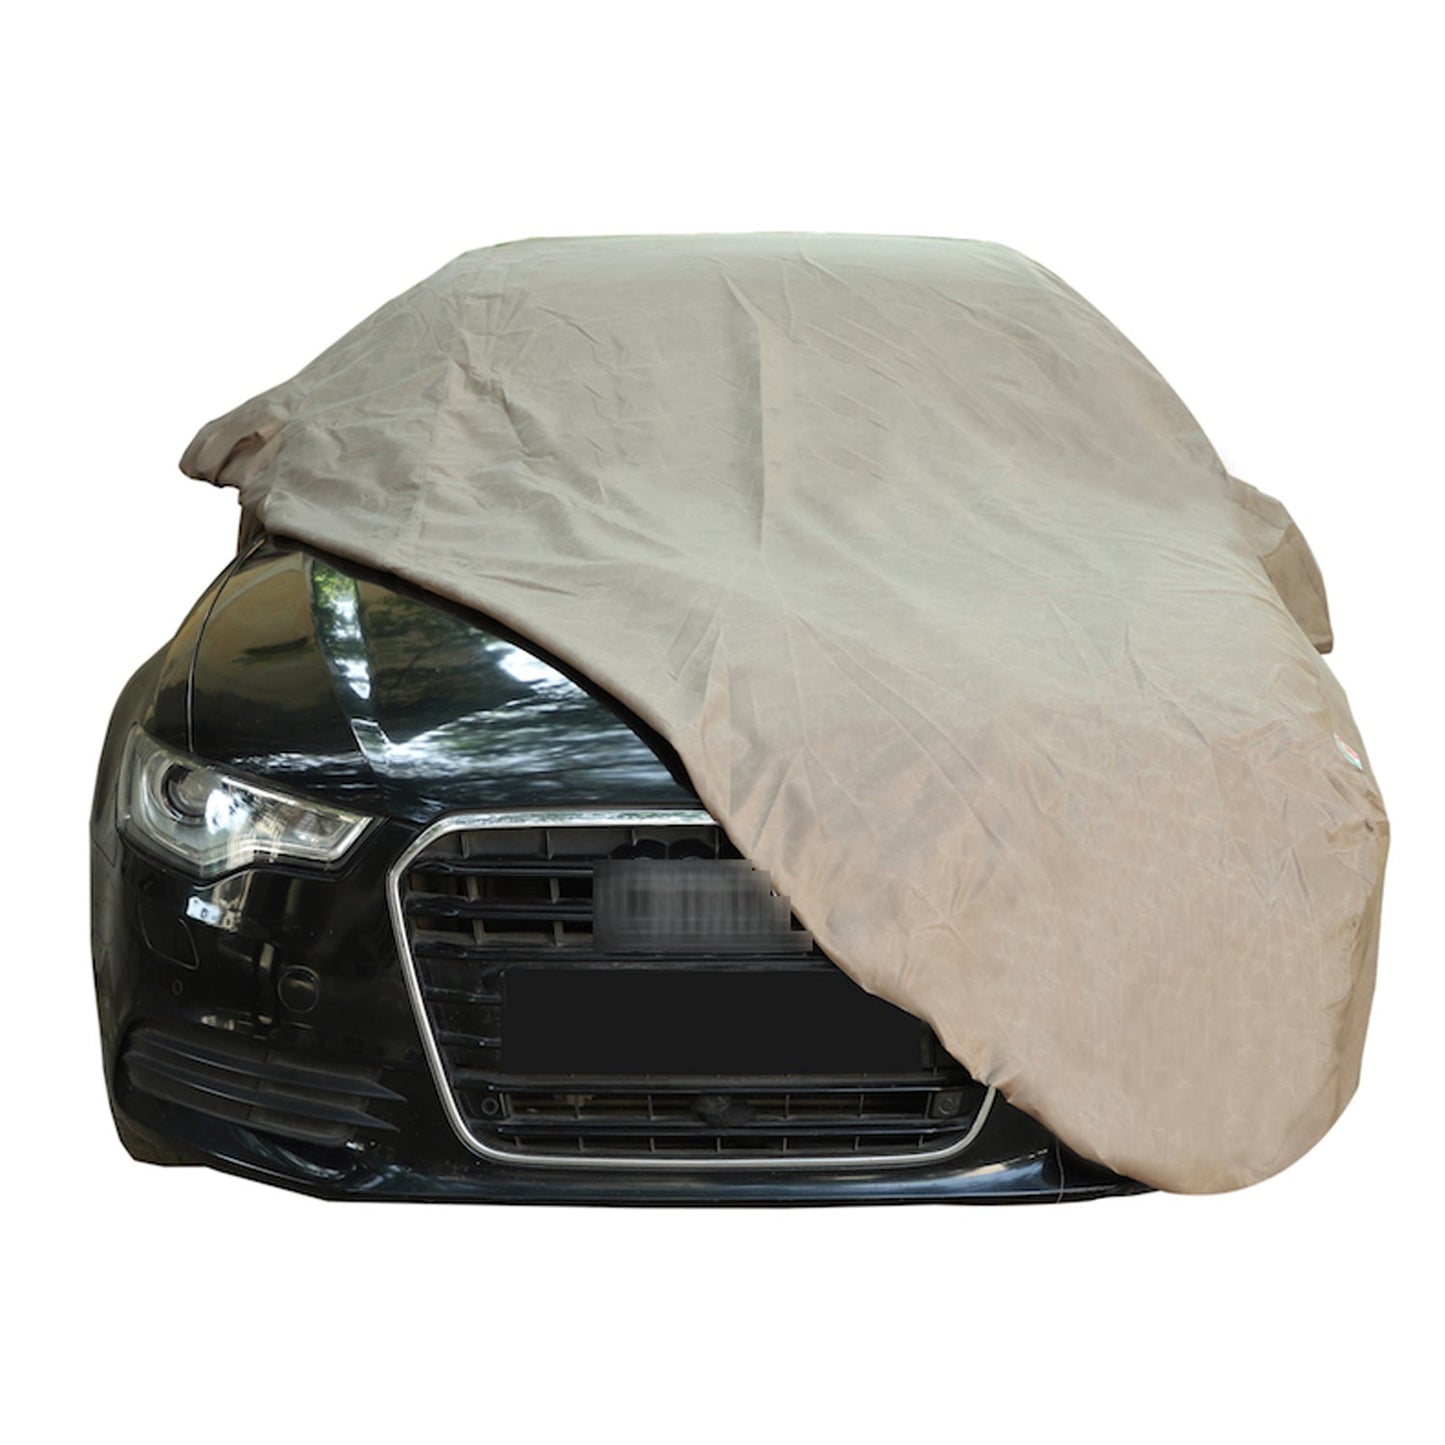 Oshotto Brown 100% Waterproof Car Body Cover with Mirror Pockets For Maruti Suzuki Ciaz